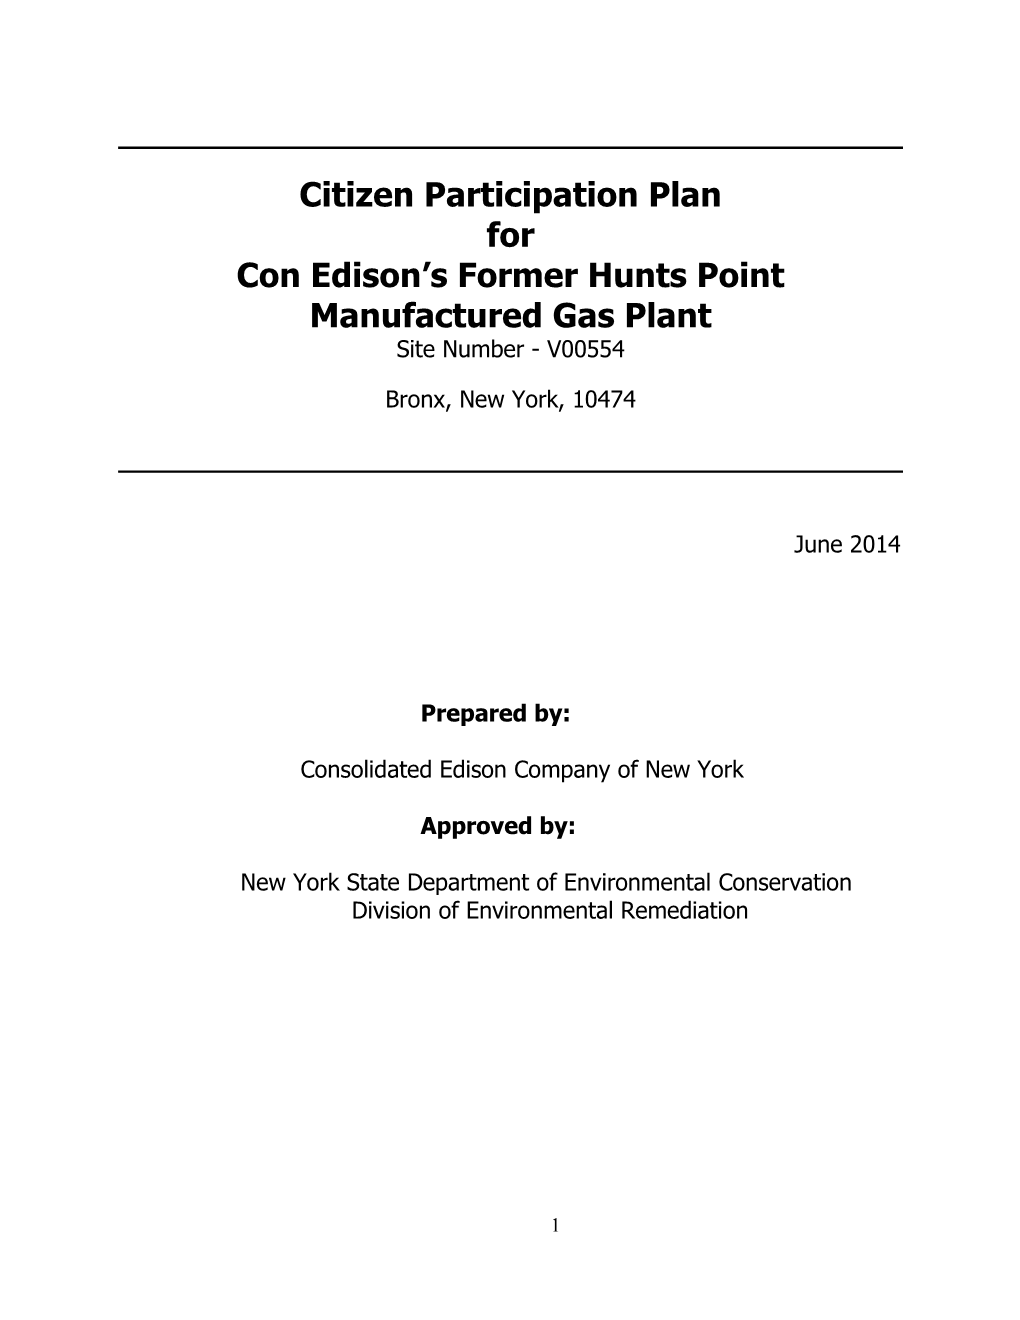 Citizen Participation Plan for Con Edison's Former Hunts Point Manufactured Gas Plant